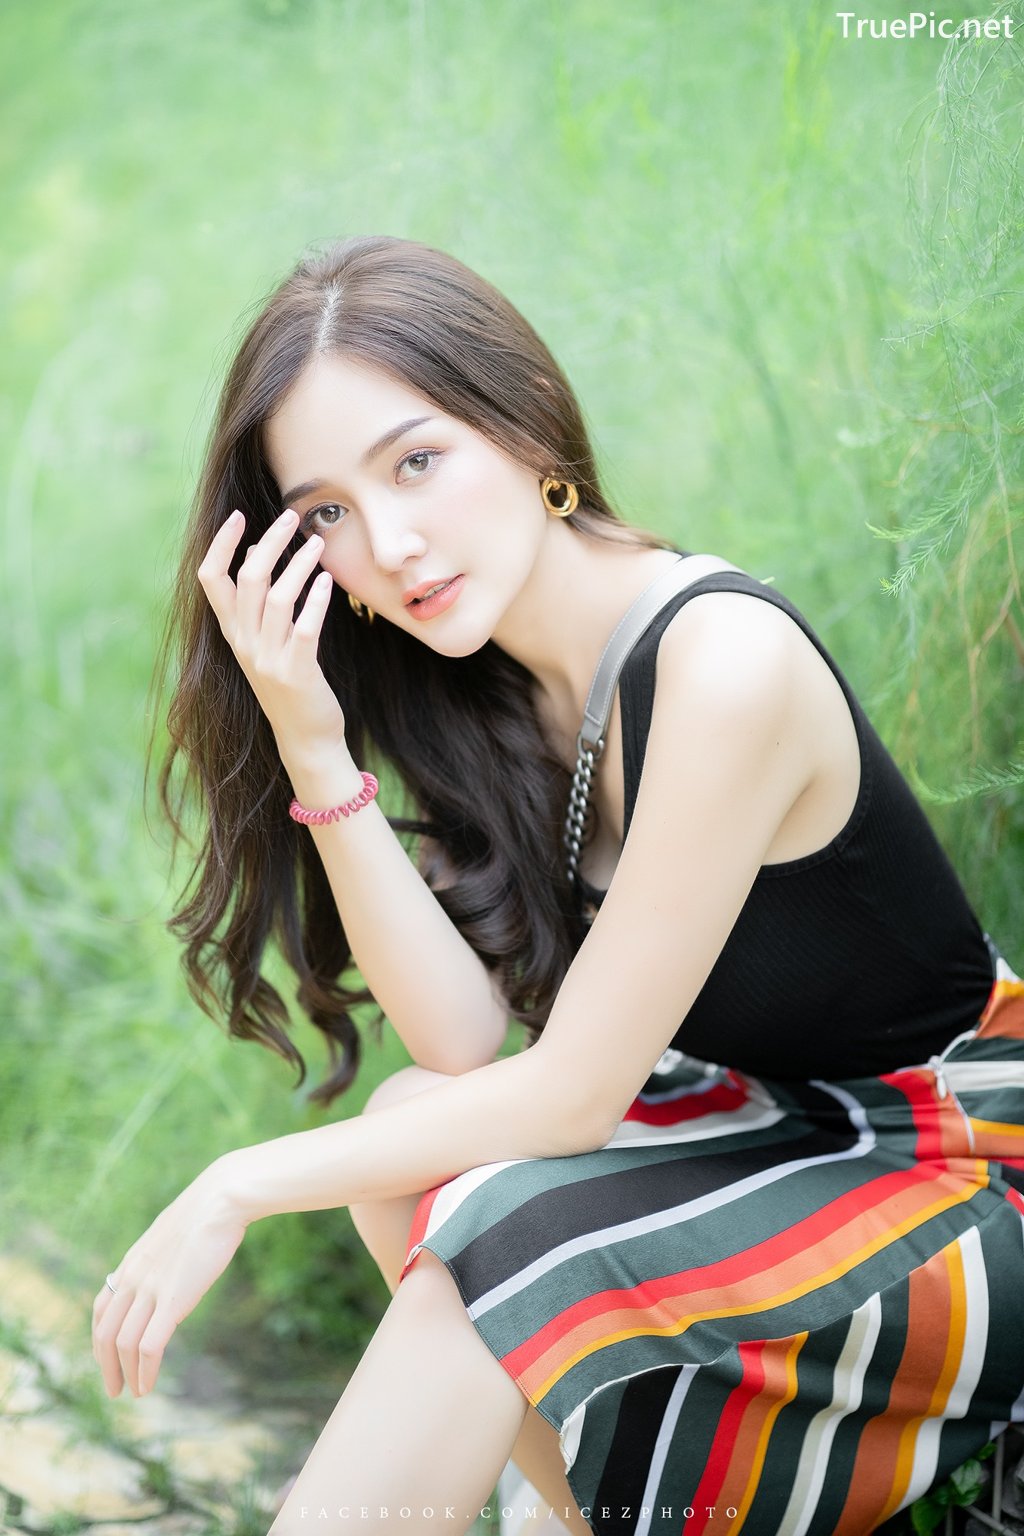 Image-Thailand-Model-Rossarin-Klinhom-Beautiful-Girl-Lost-In-The-Flower-Garden-TruePic.net- Picture-28